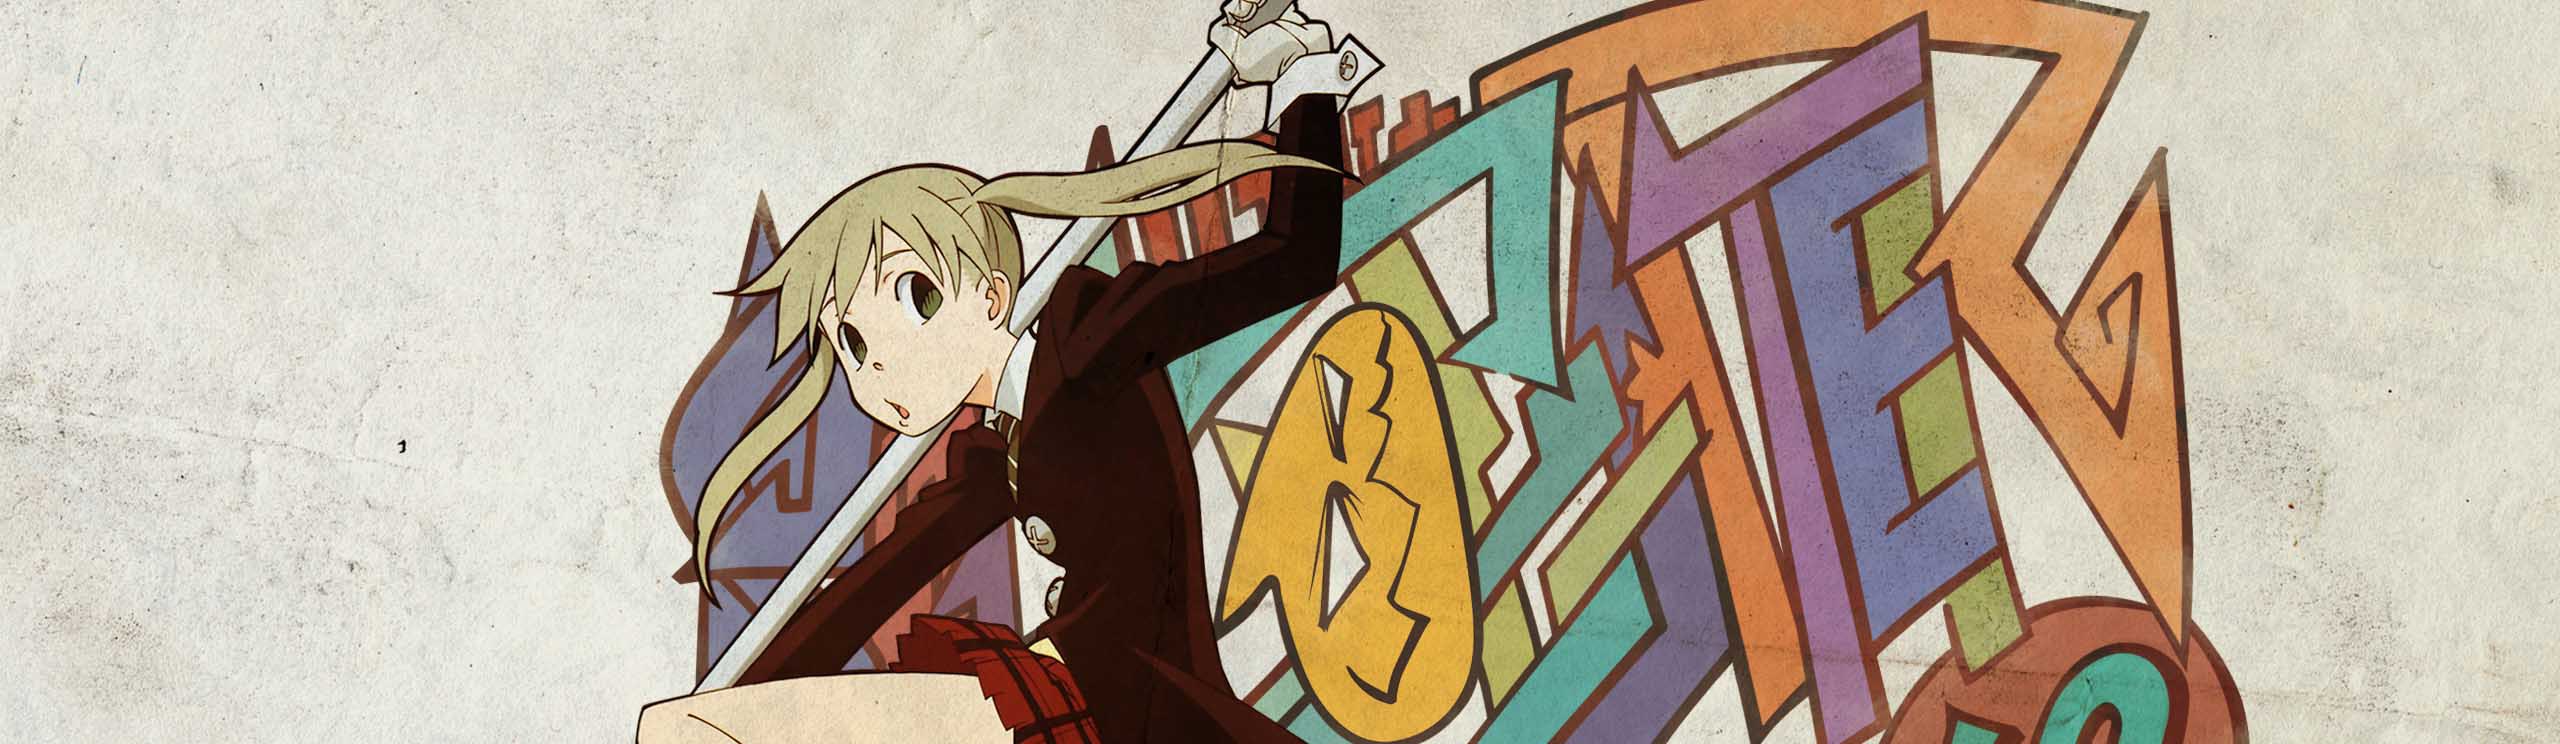 banner anime